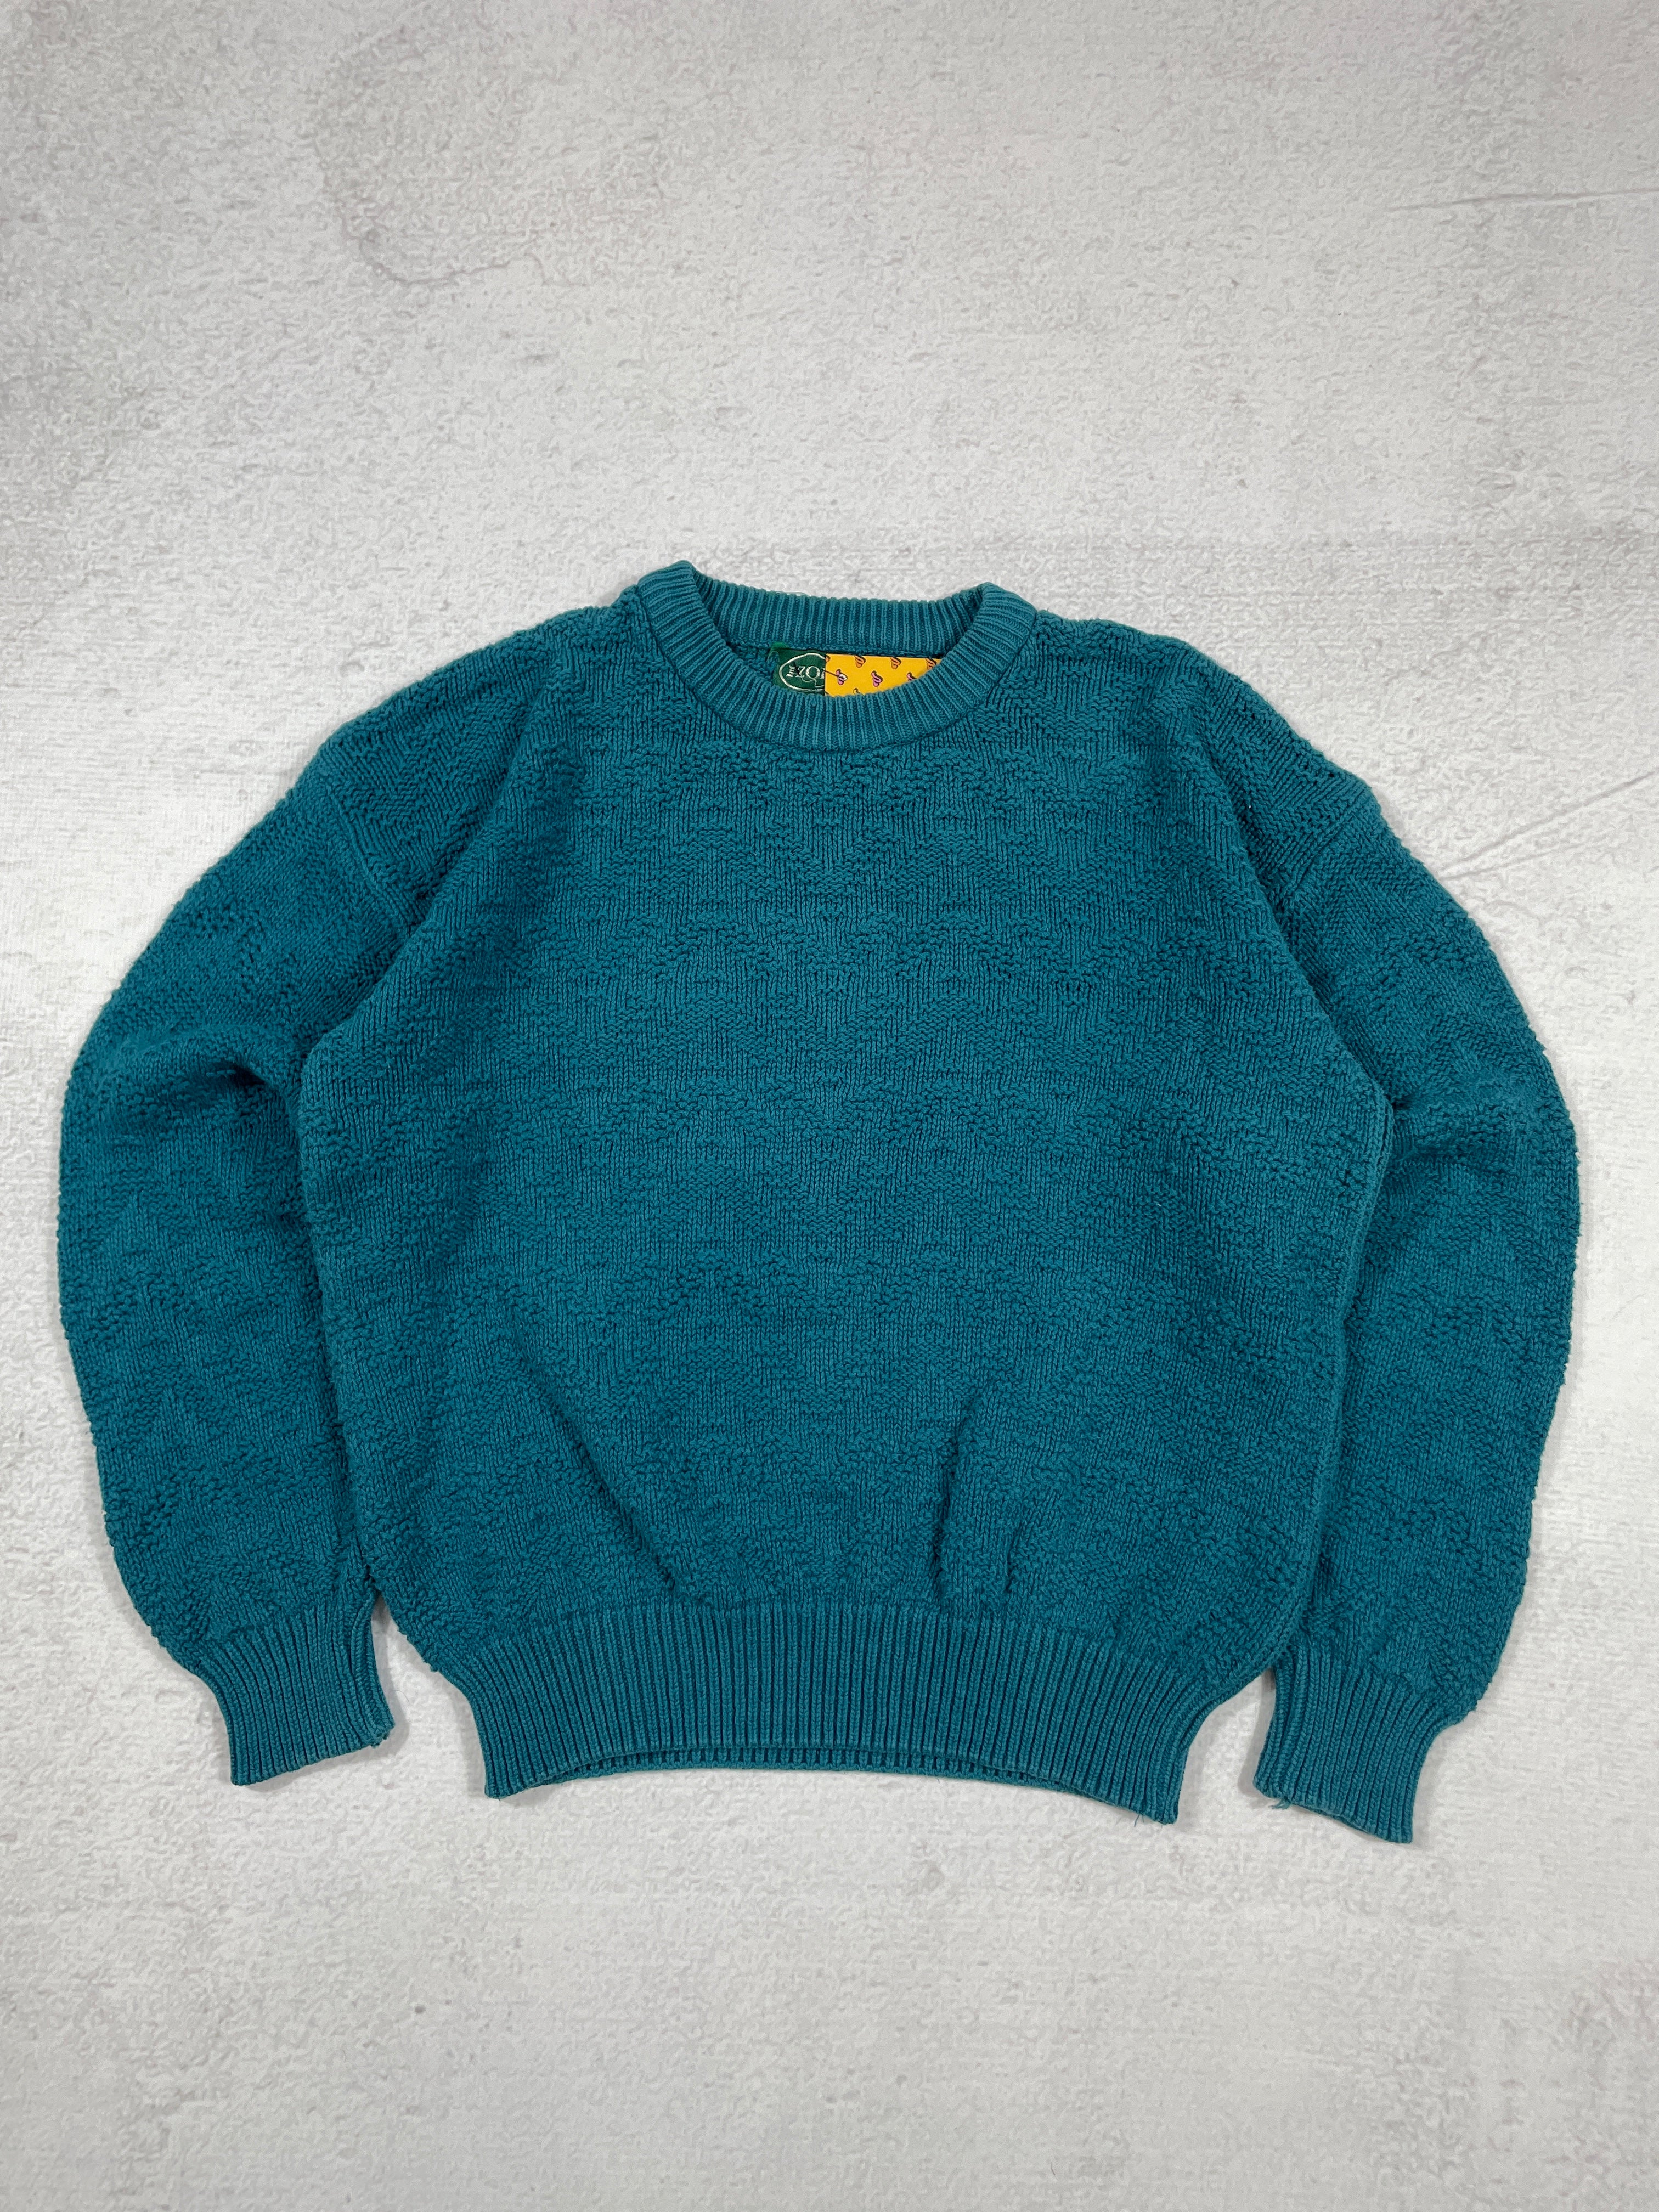 Vintage Izod Knitted Sweater - Women's Medium